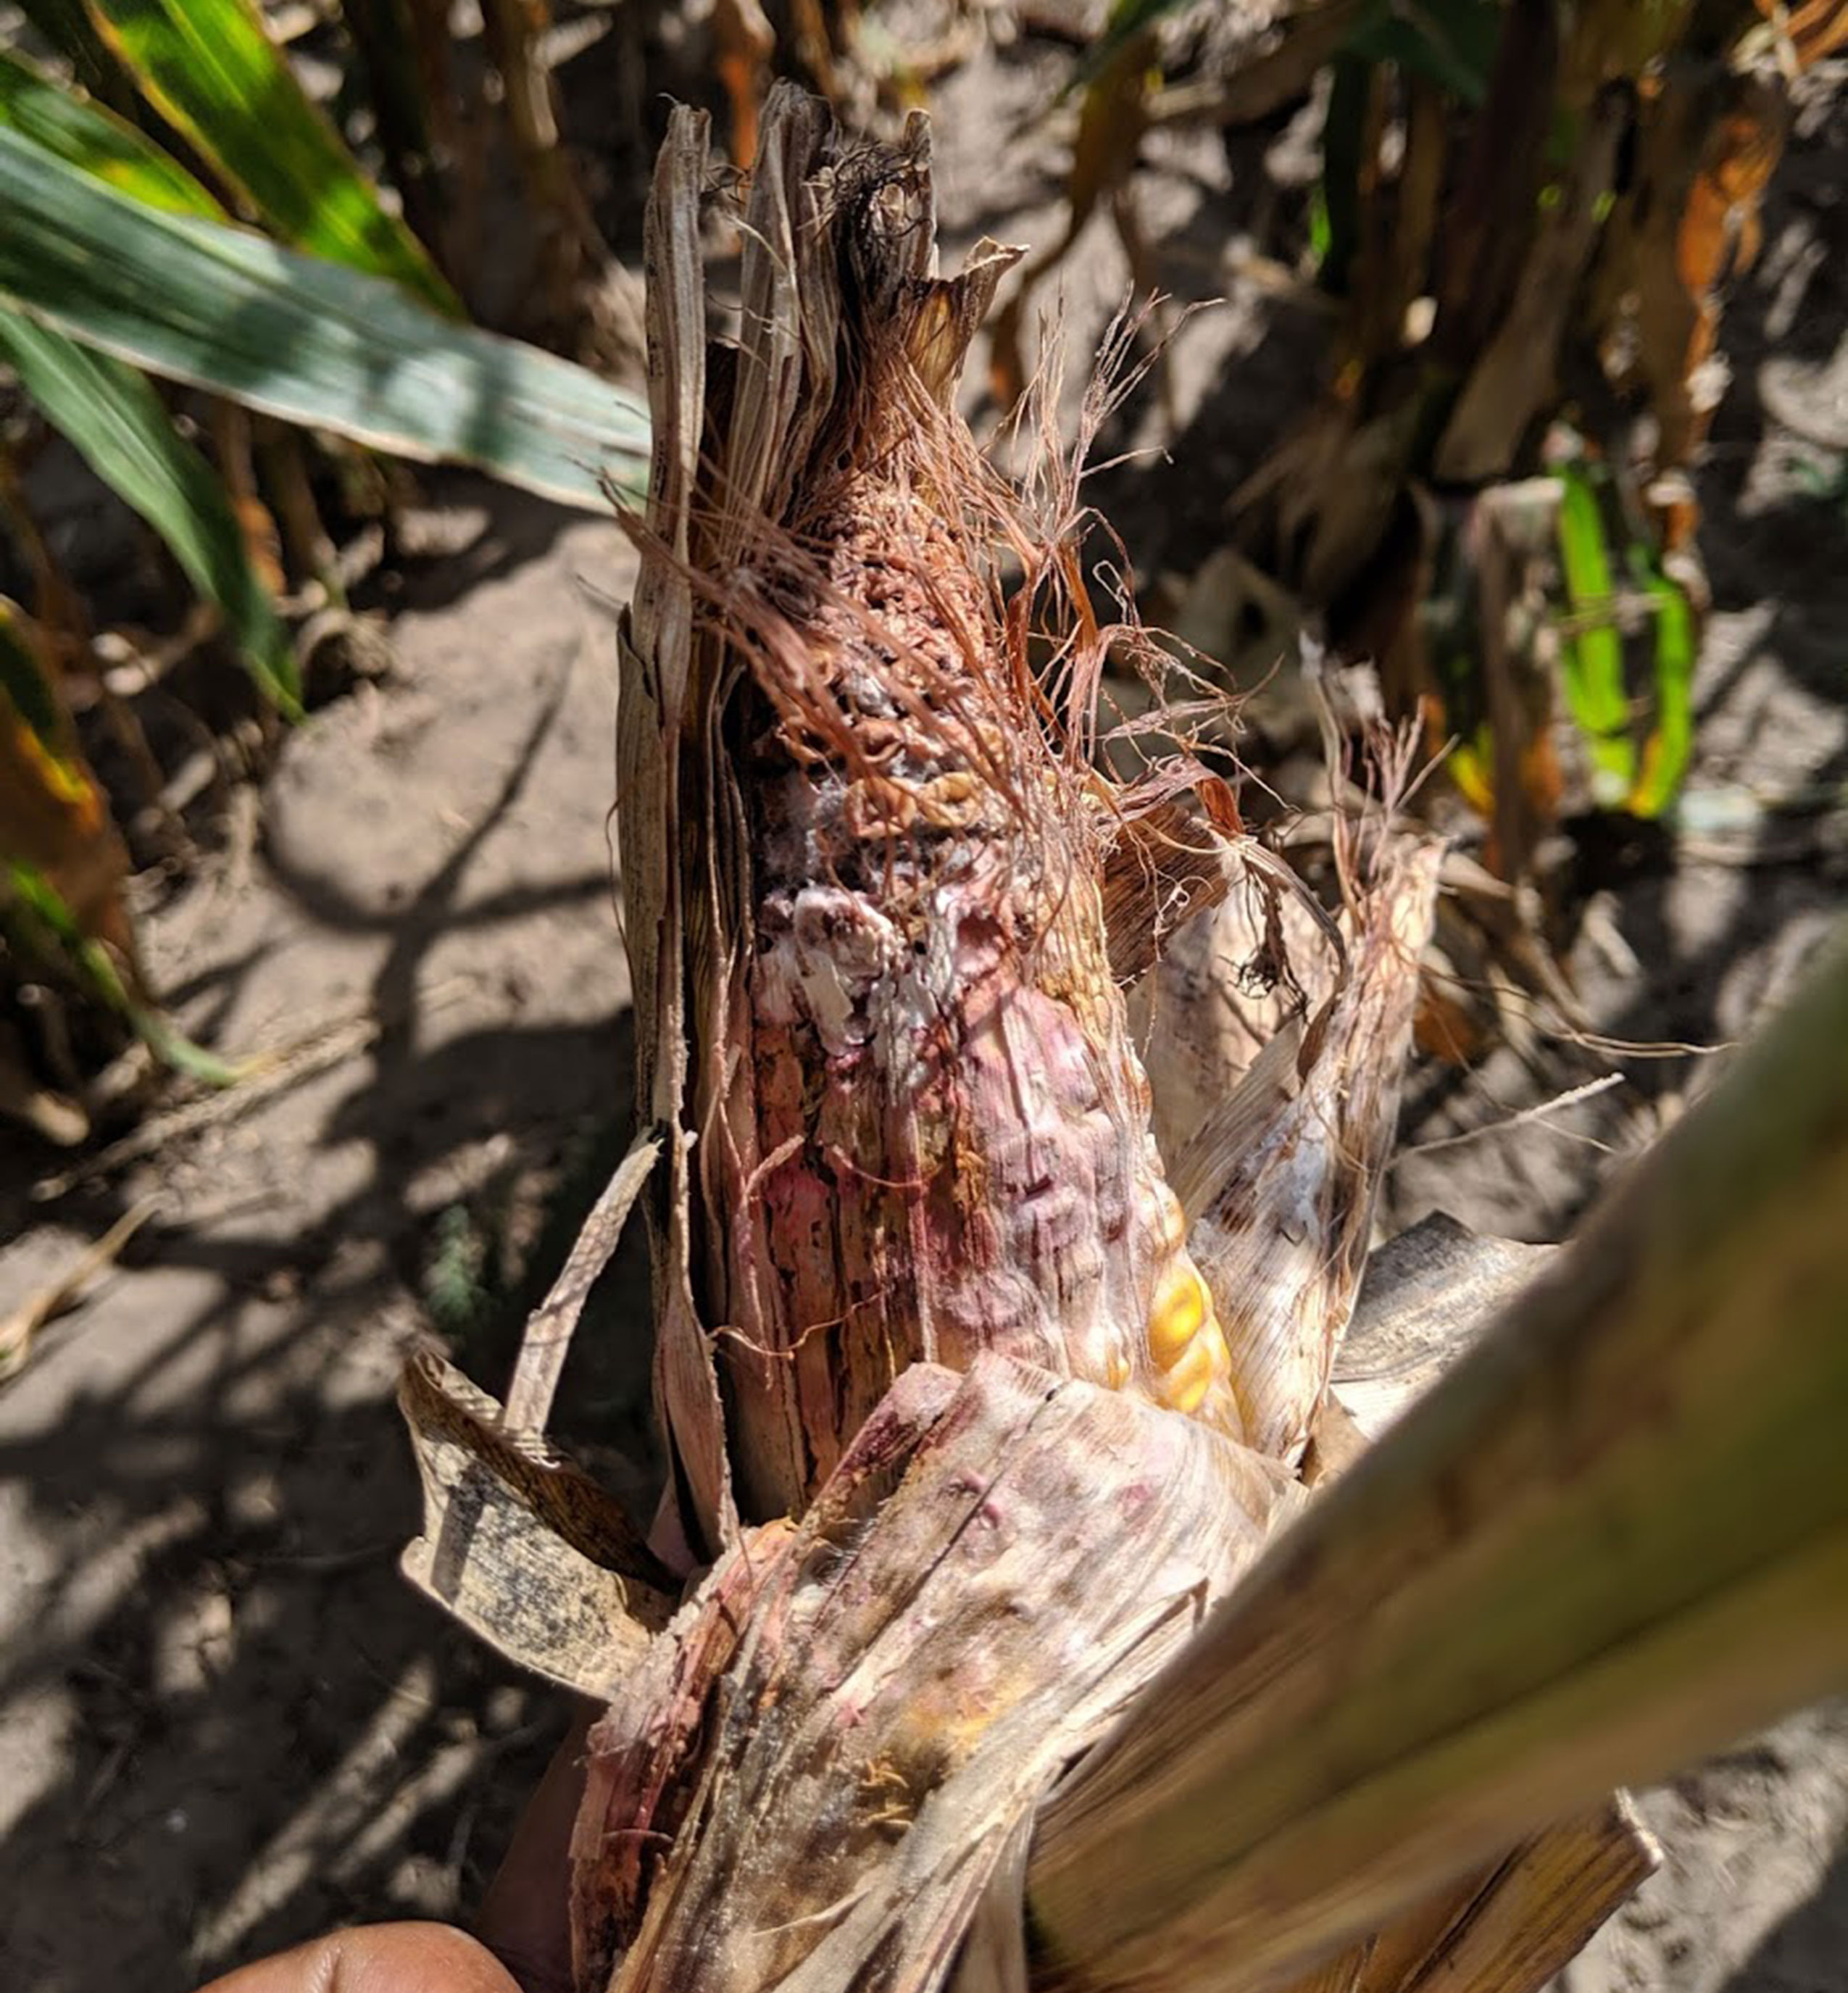 A corn husk peeled down revealing symptoms of Gibberella ear rot.